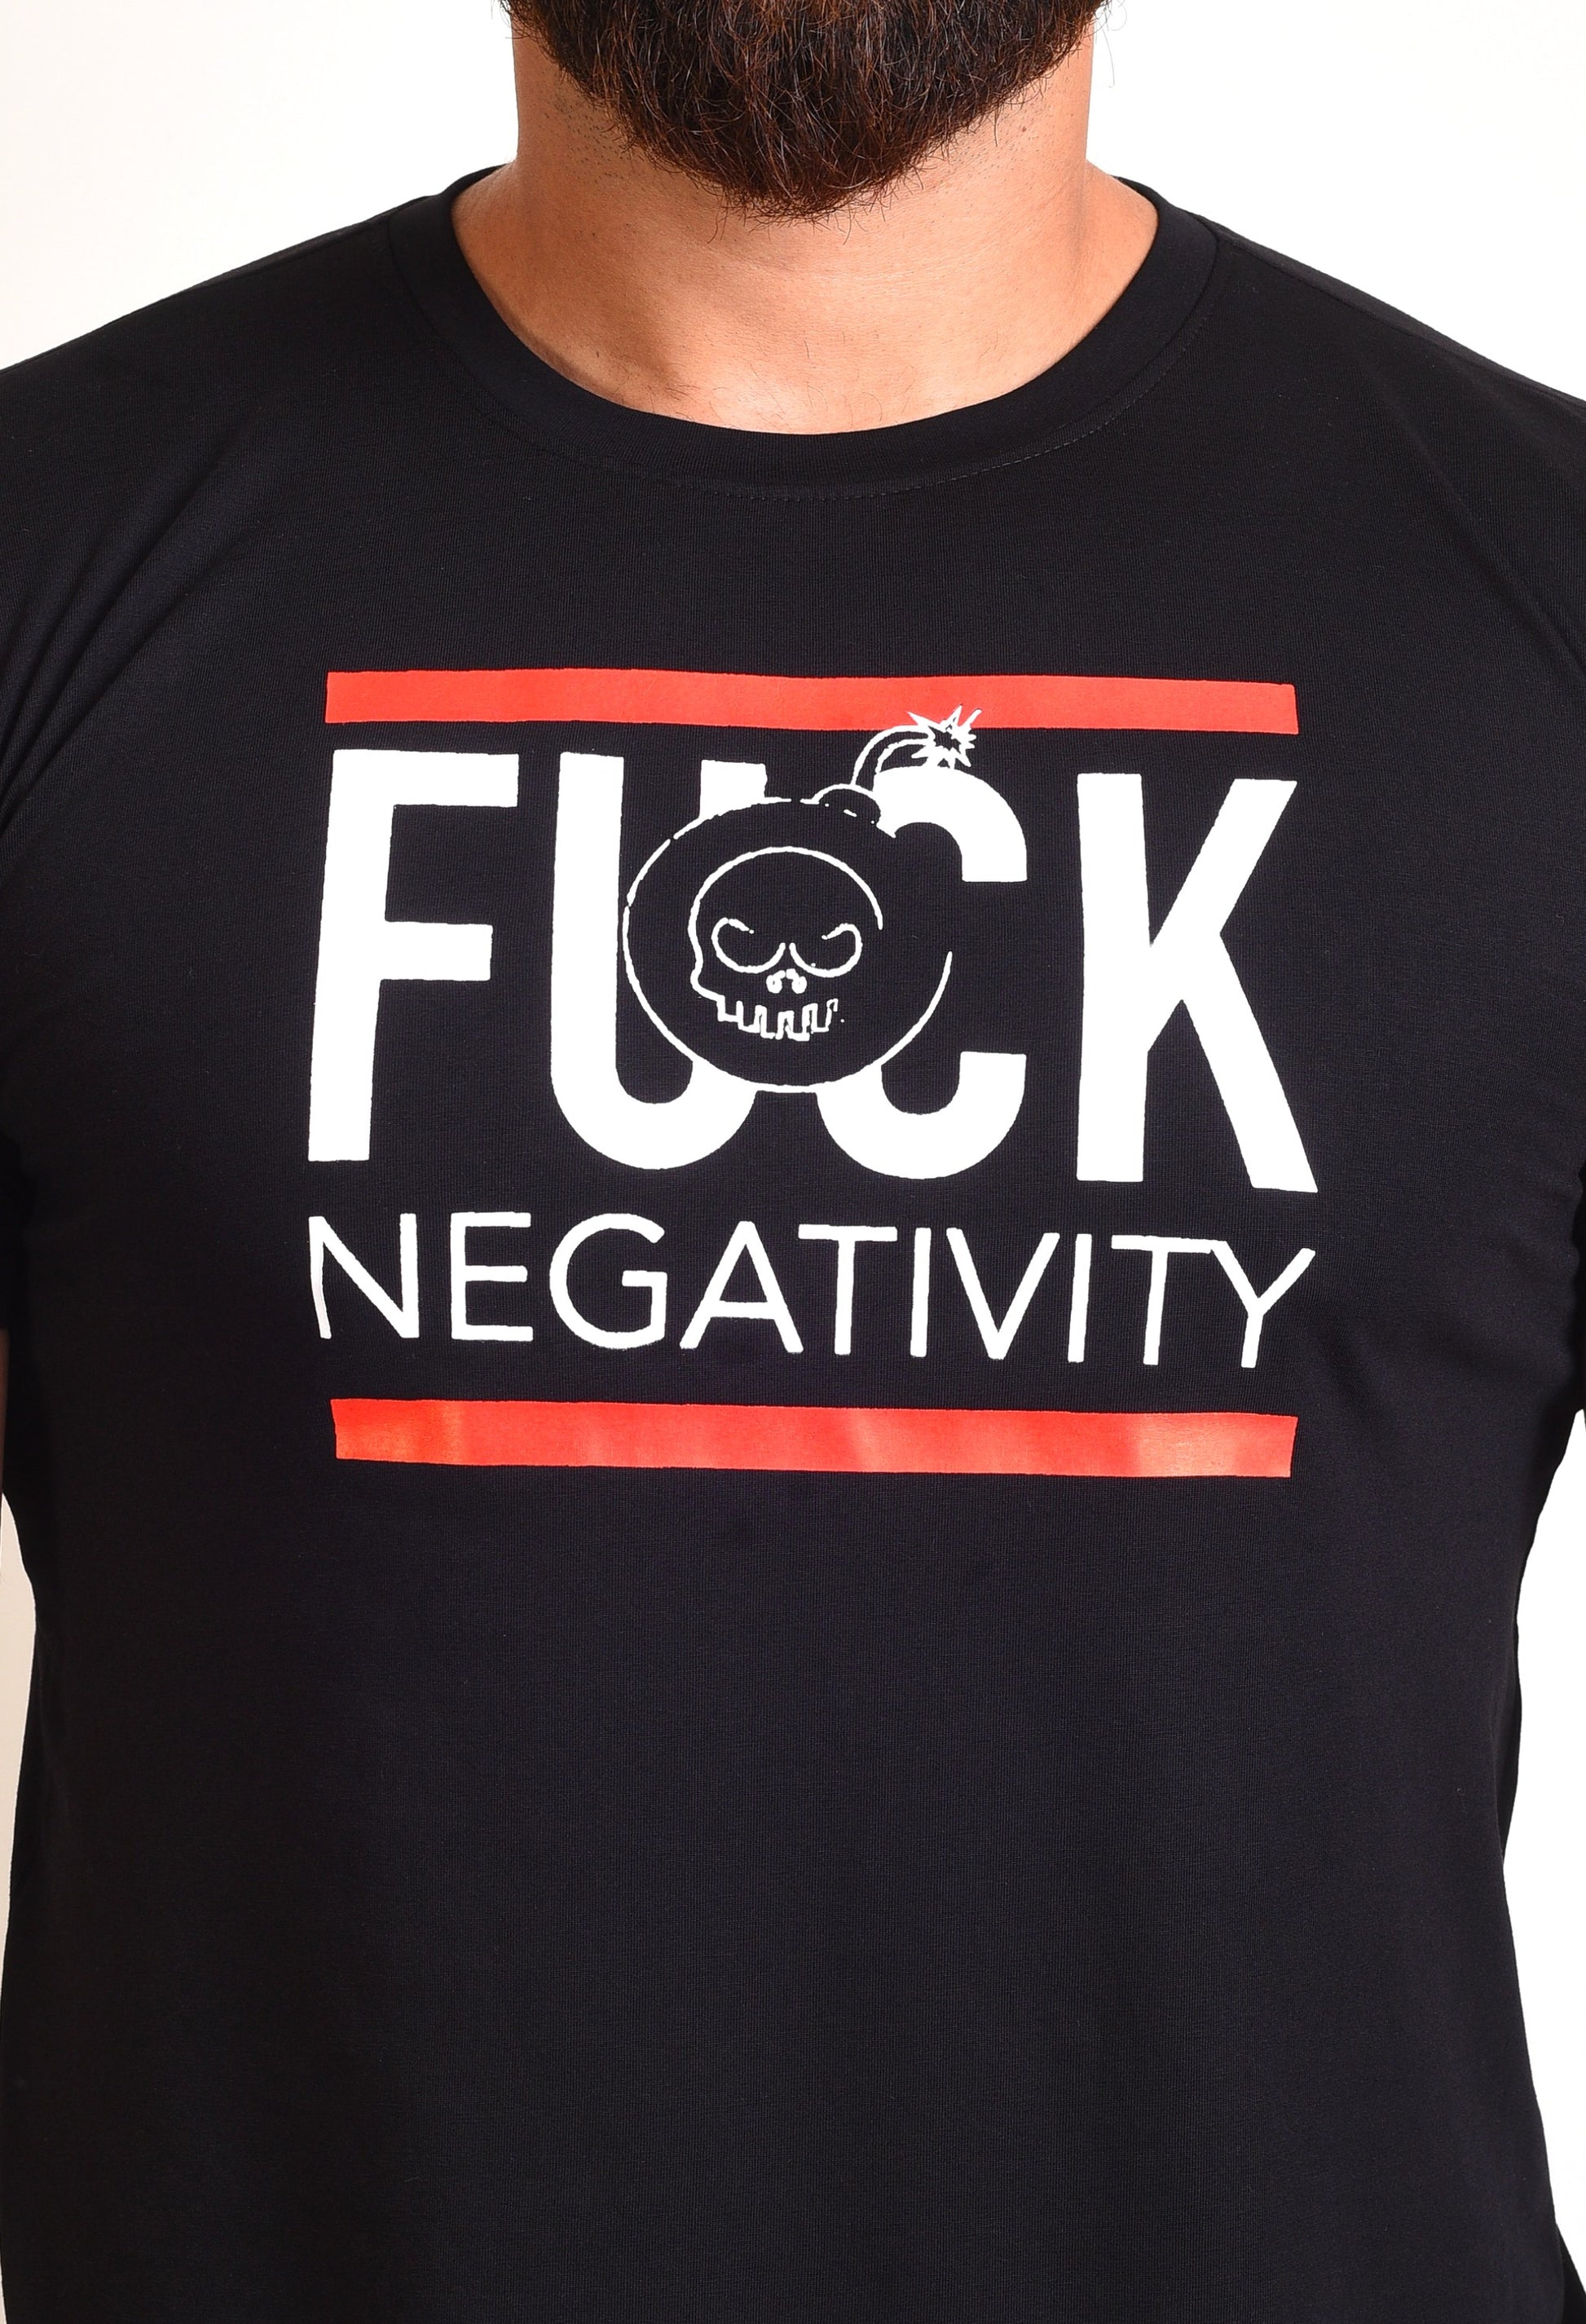 Gym T Shirt - Fuck Negativity - Men T-Shirt with premium cotton Lycra. The Sports T Shirt by Strong Soul